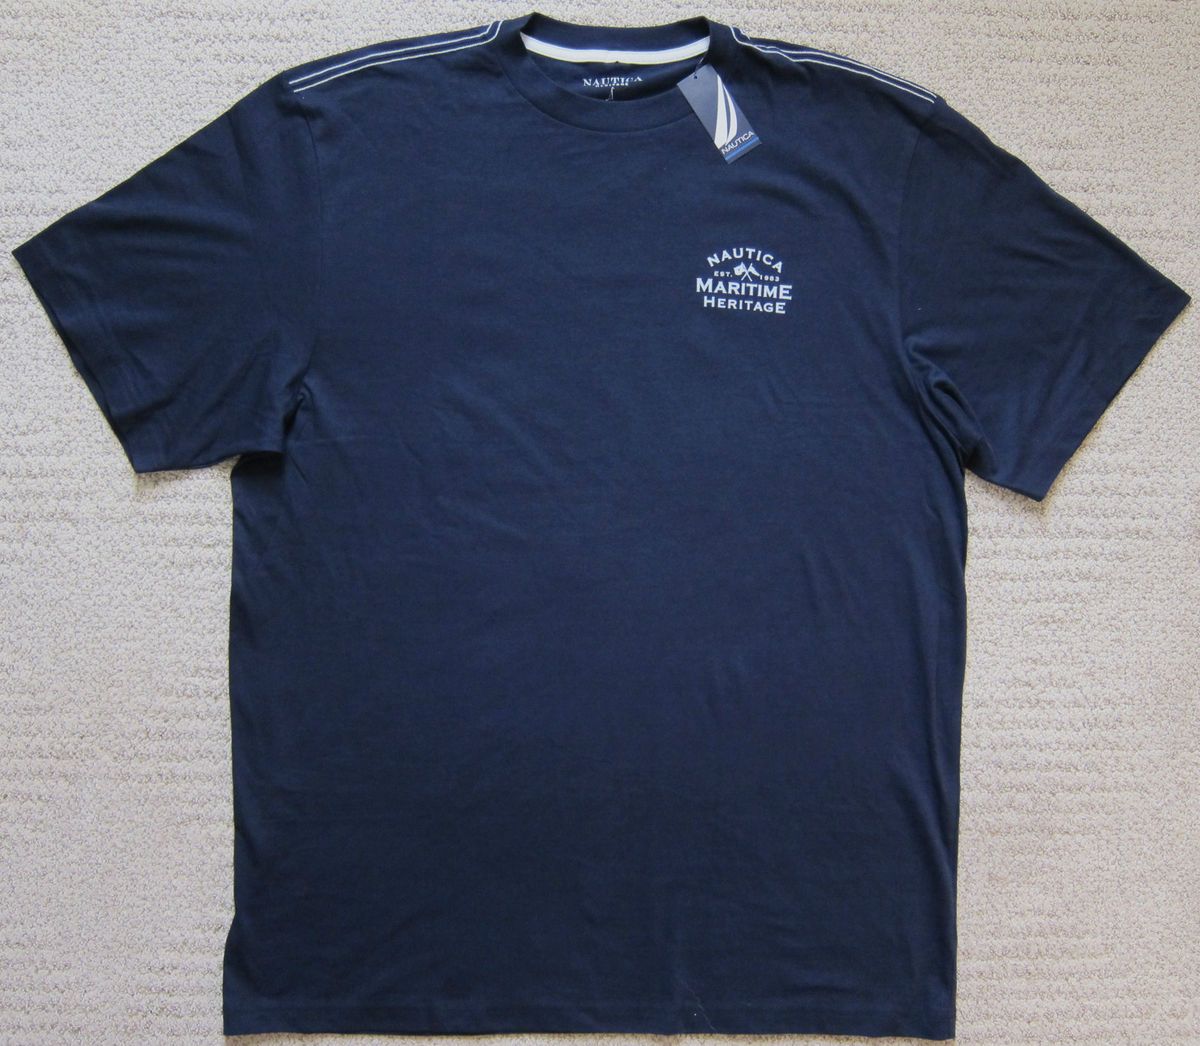  Nautica Navy Premium Big Tall T Shirt Men's $29 50